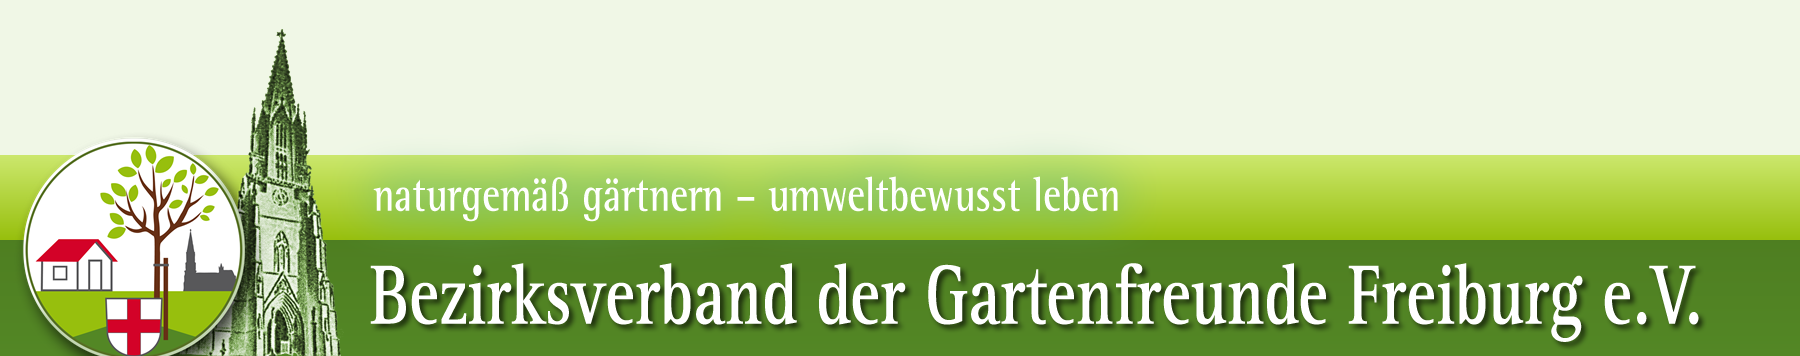 Bezirksverband der Gartenfreunde Freiburg e.V.